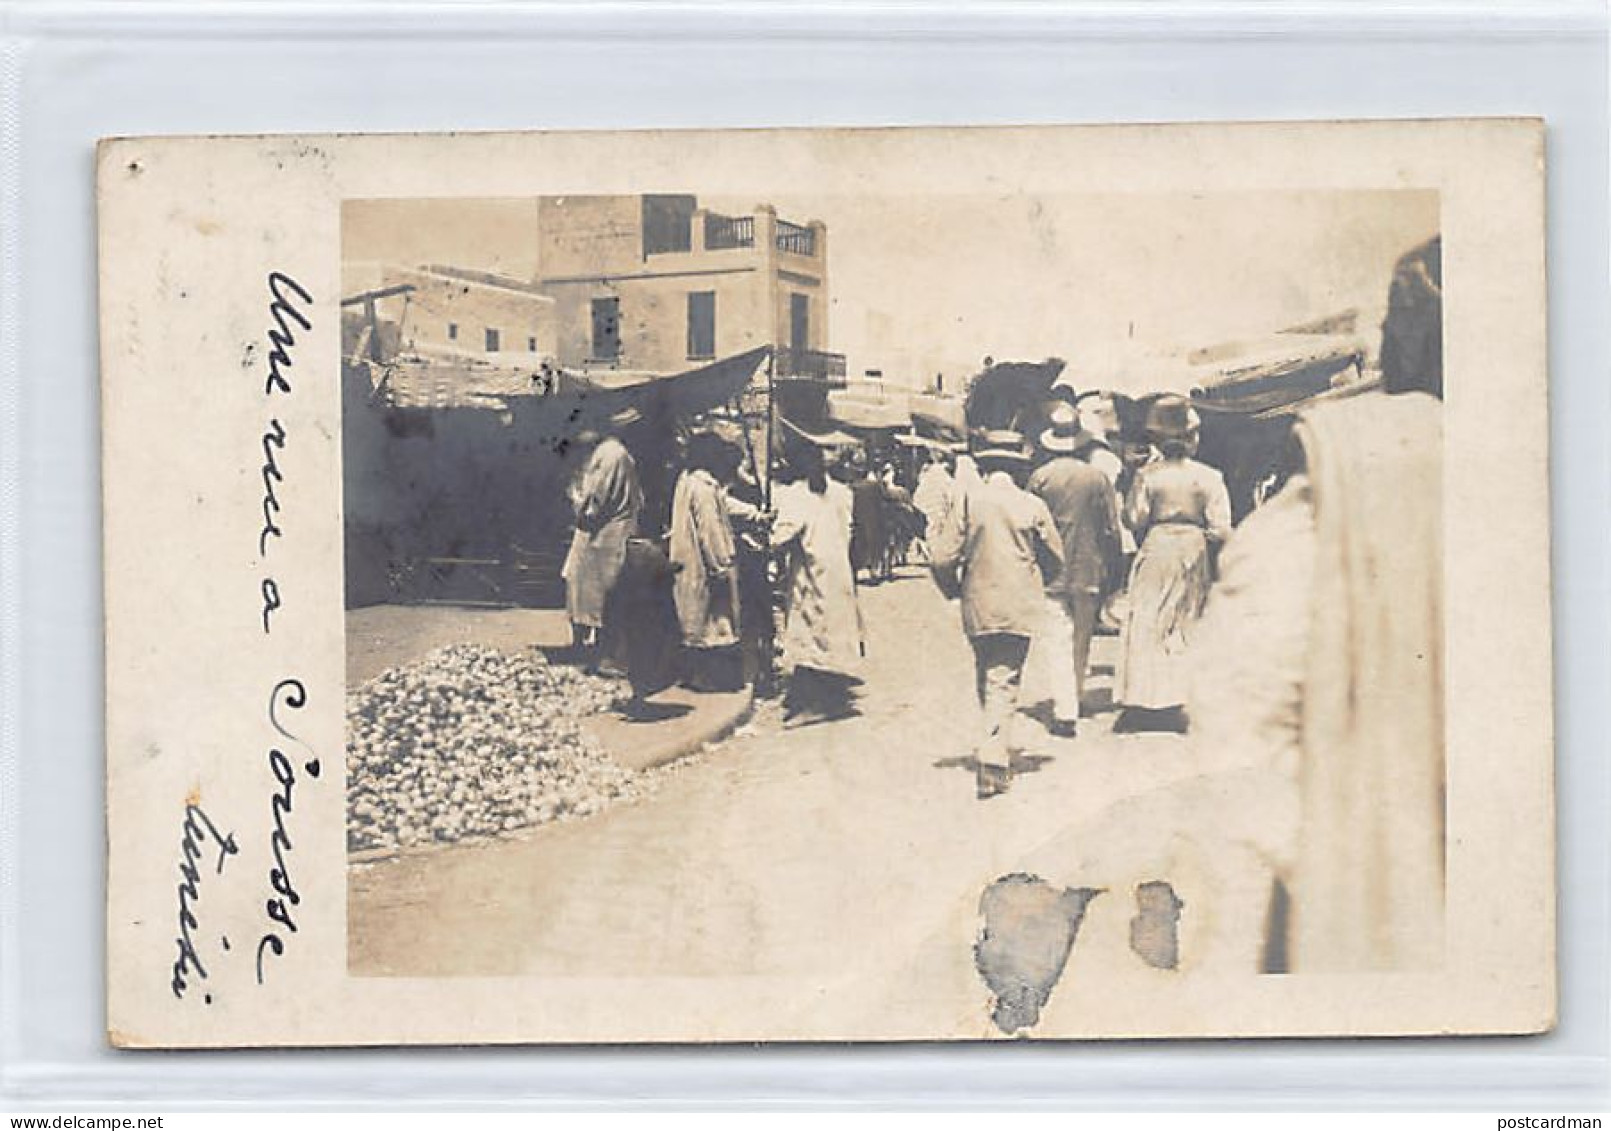 SOUSSE - Une Rue - CARTE PHOTO Année 1909 - Ed. Inconnu  - Tunisia